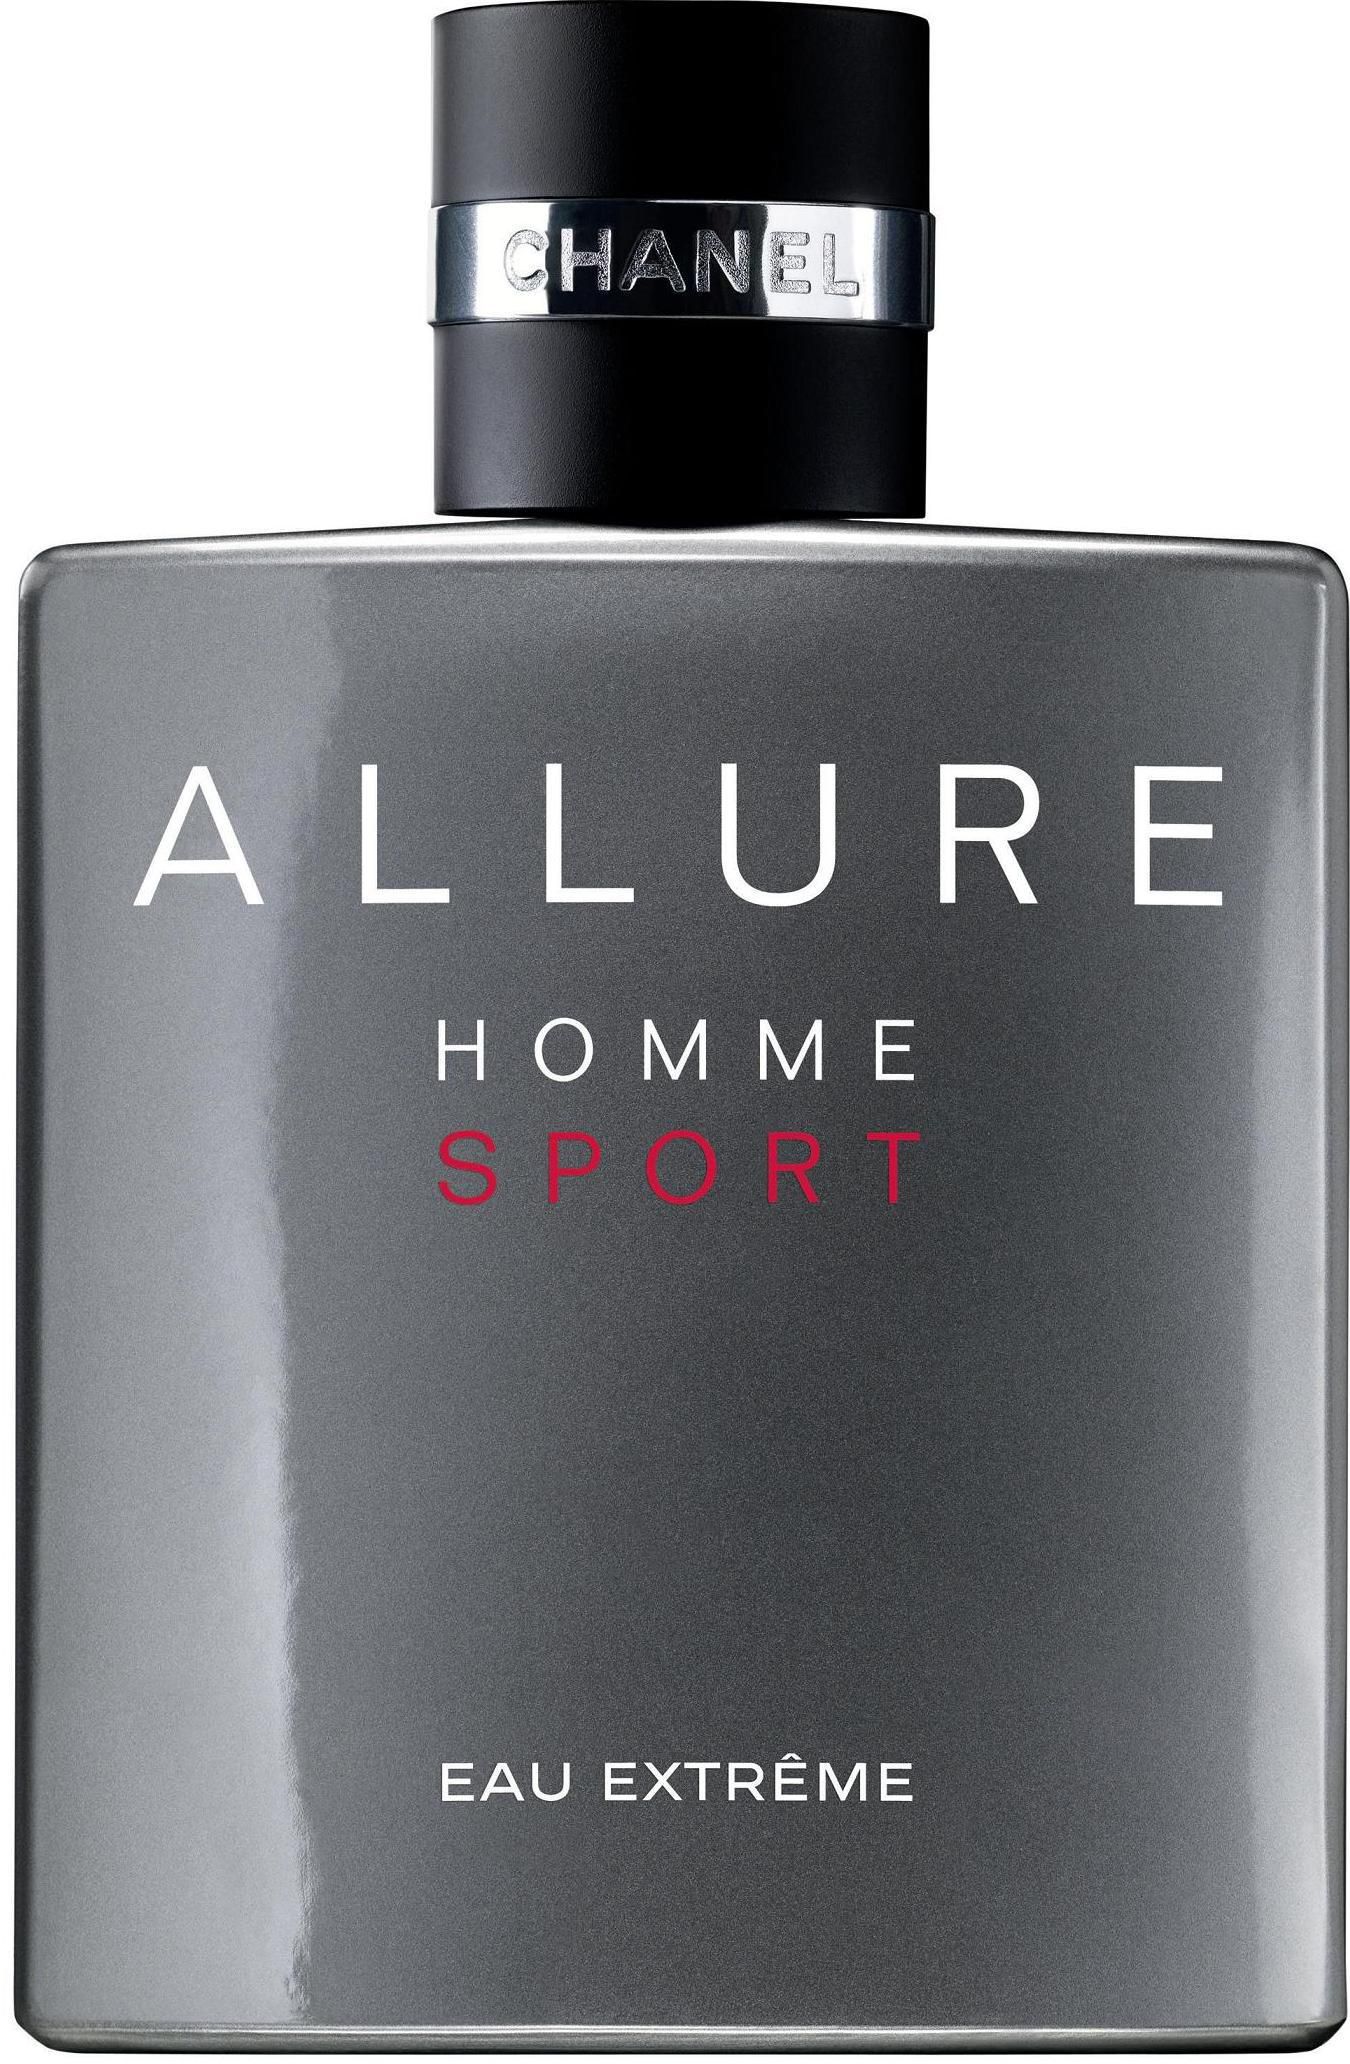 Chanel Allure Homme Sport Eau Extreme 50ml For Men